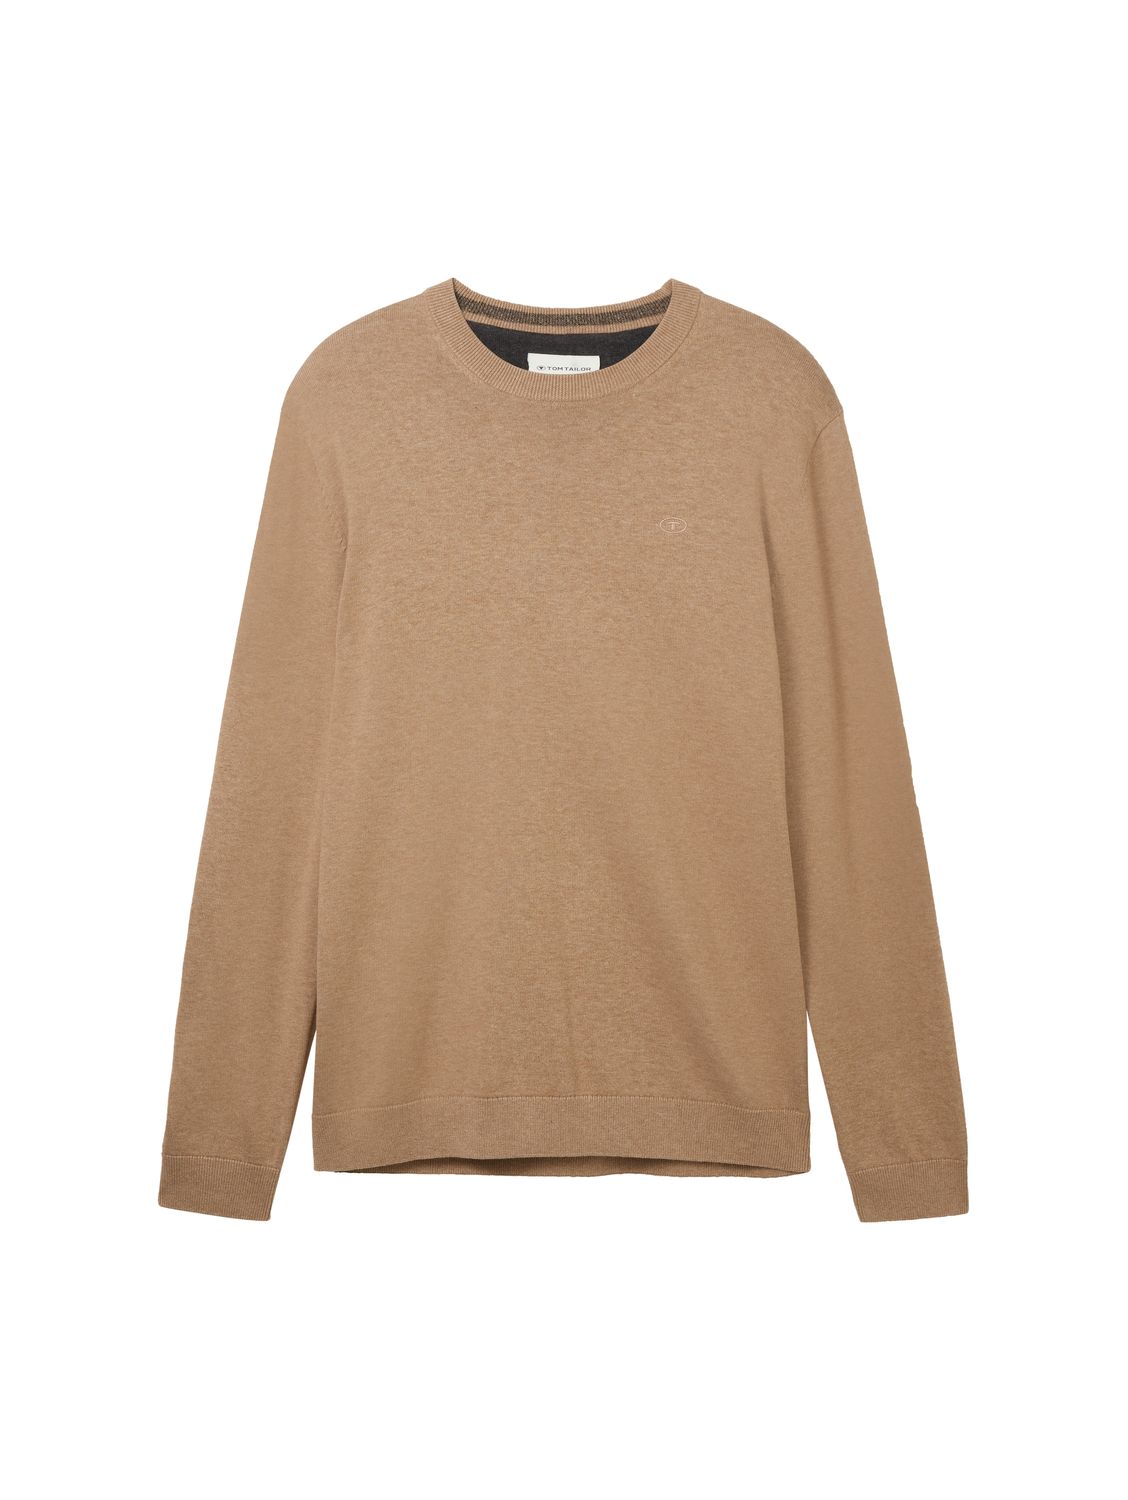 Пуловер Tom Tailor BASIC CREWNECK, коричневый пуловер tom tailor dünner feinstrick basic v ausschnitt sweater коричневый